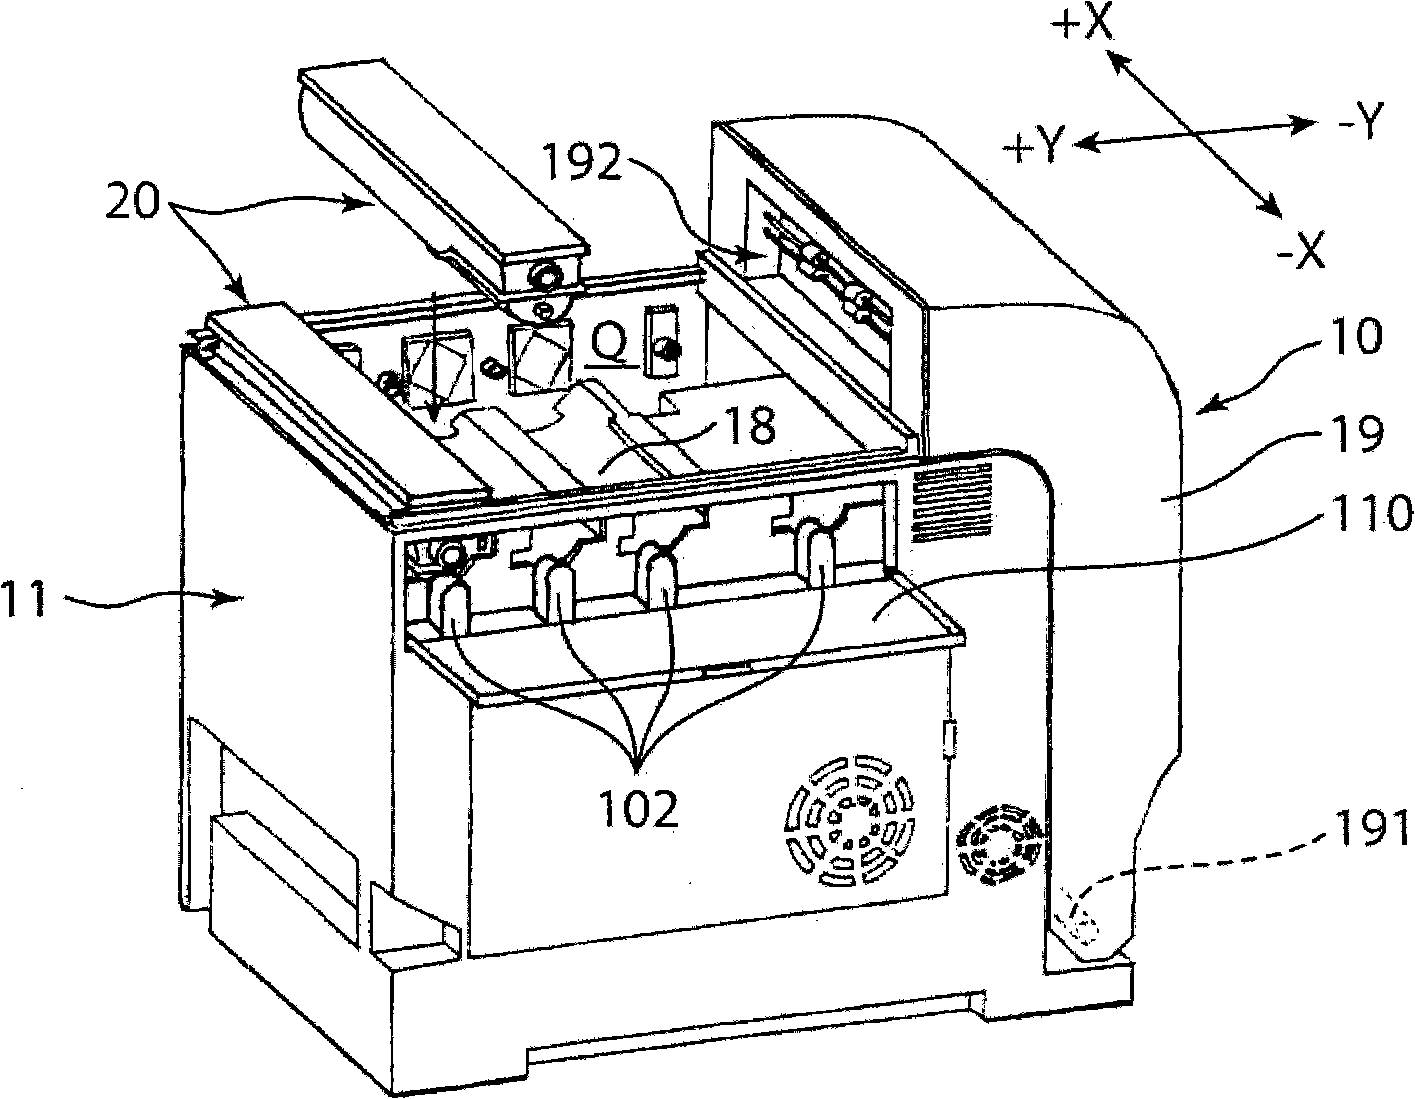 Toner cartridge, toner refilling method and image forming apparatus using the toner cartridge